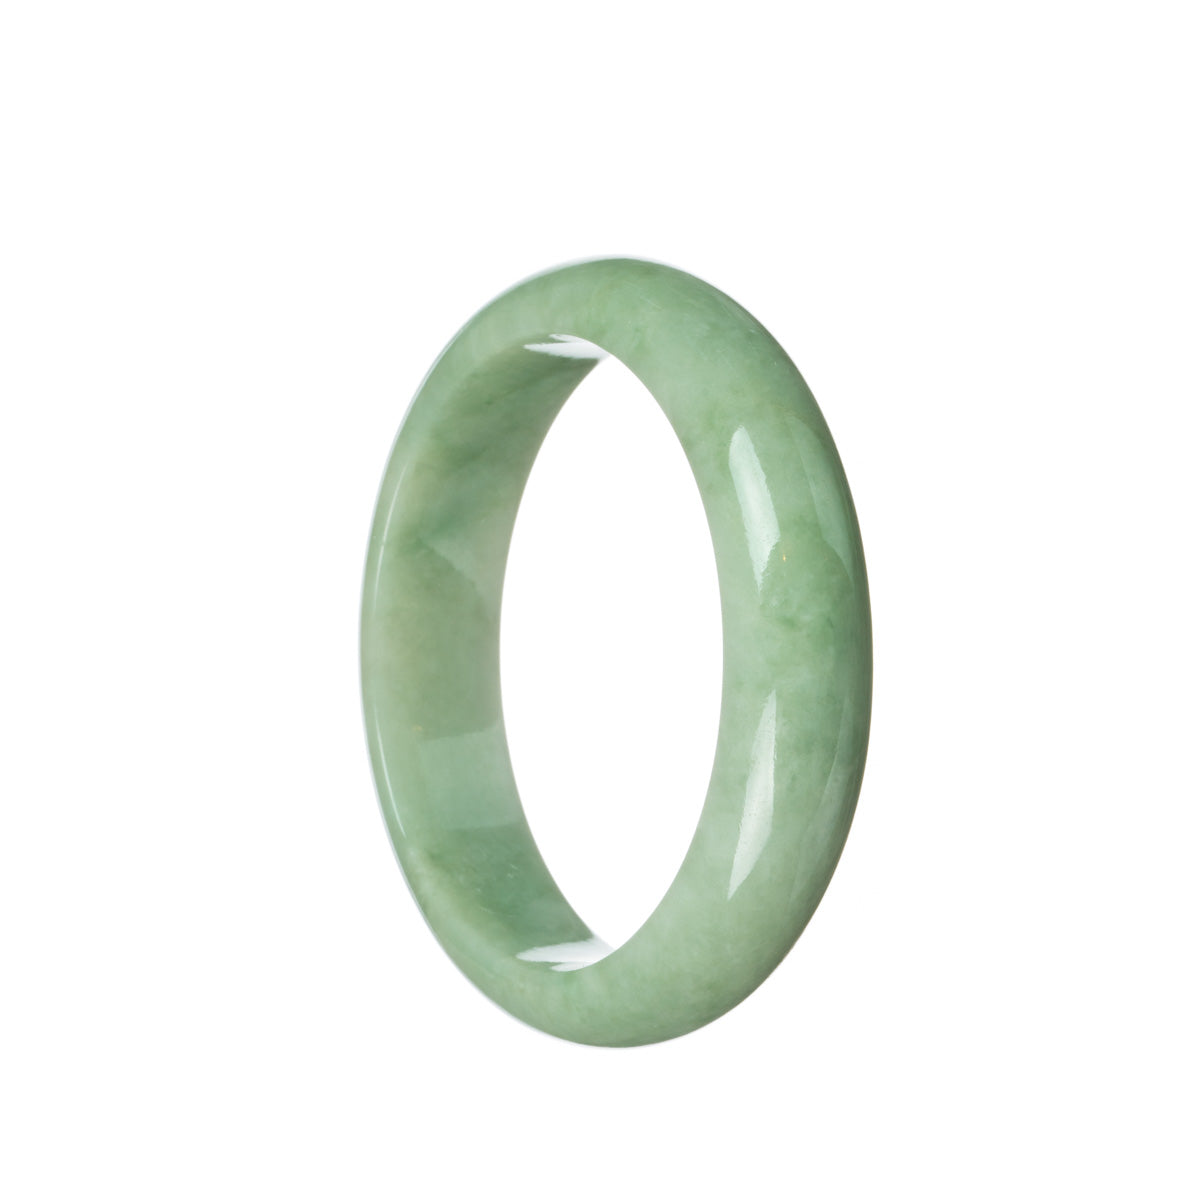 Certified Type A Green Burma Jade Bangle Bracelet - 59mm Half Moon